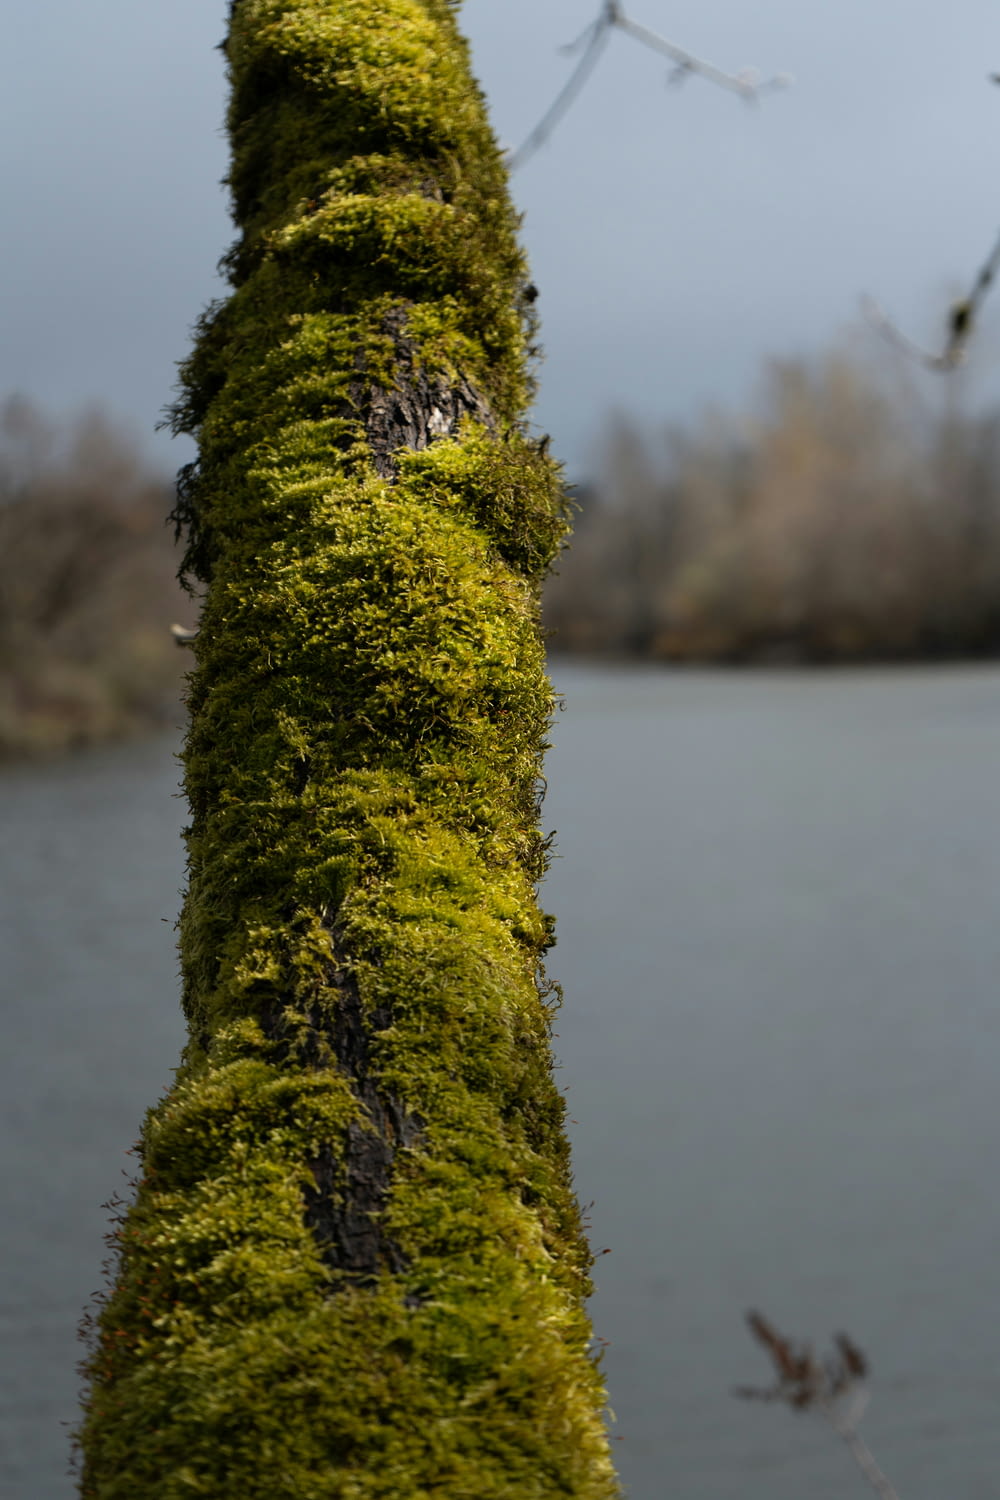 moss growing on a pole near a body of water